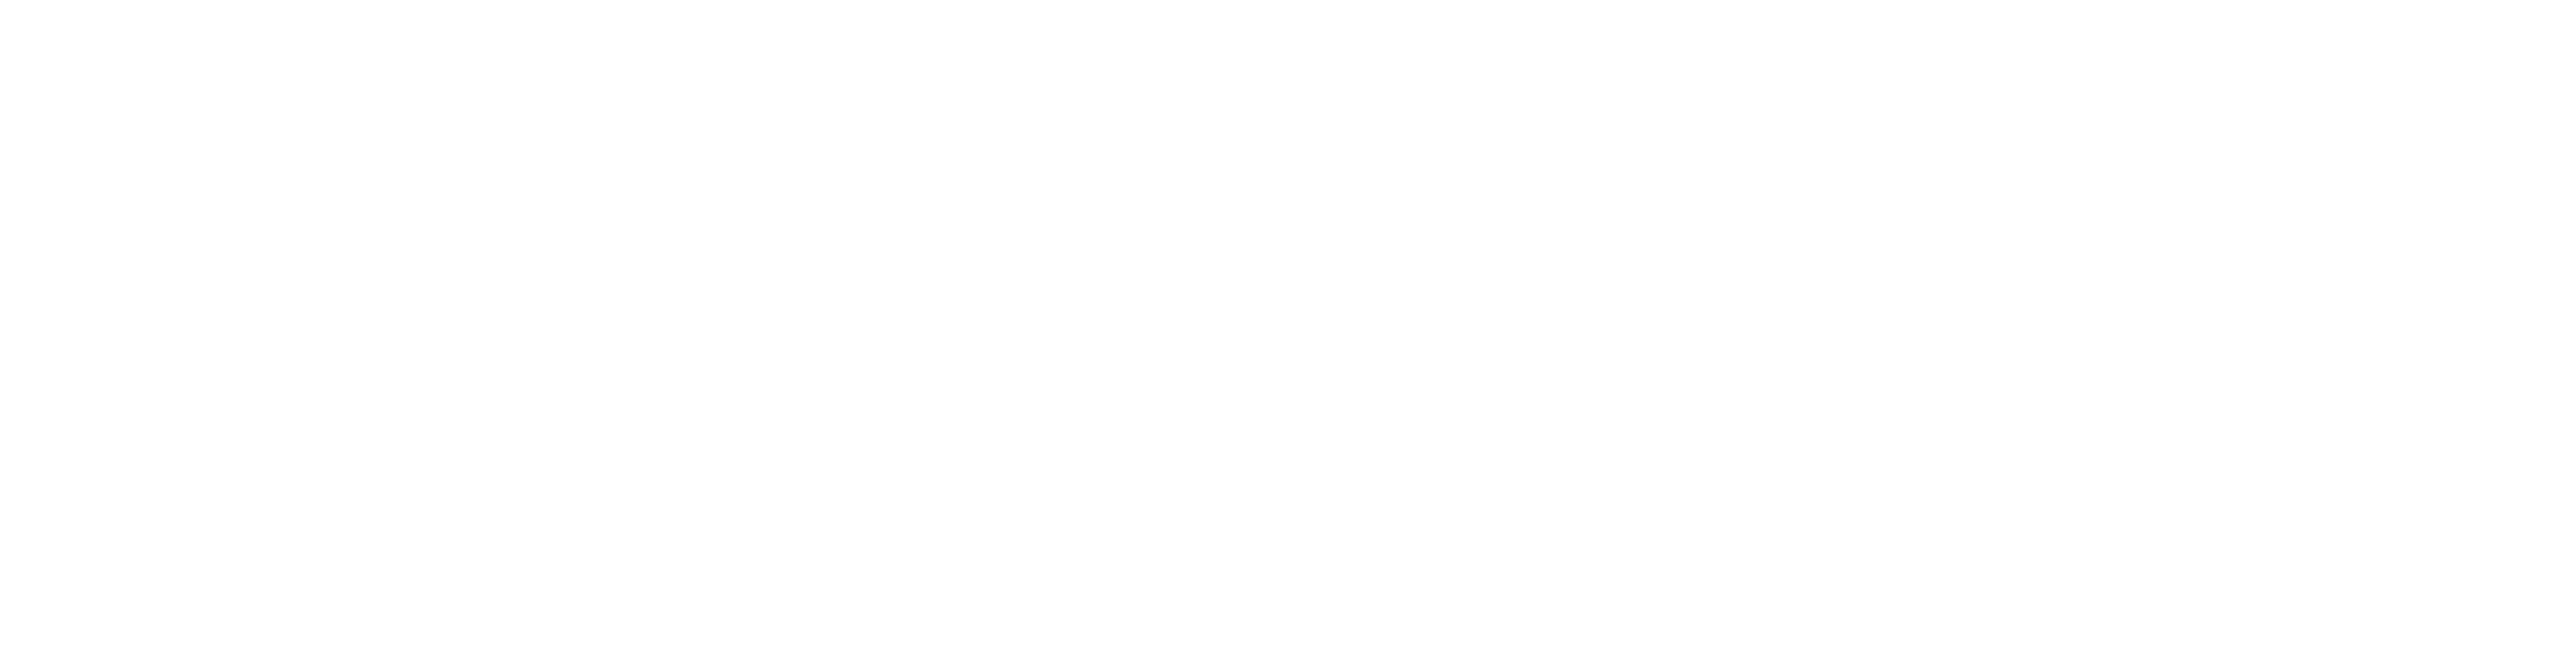 lapccenter logo